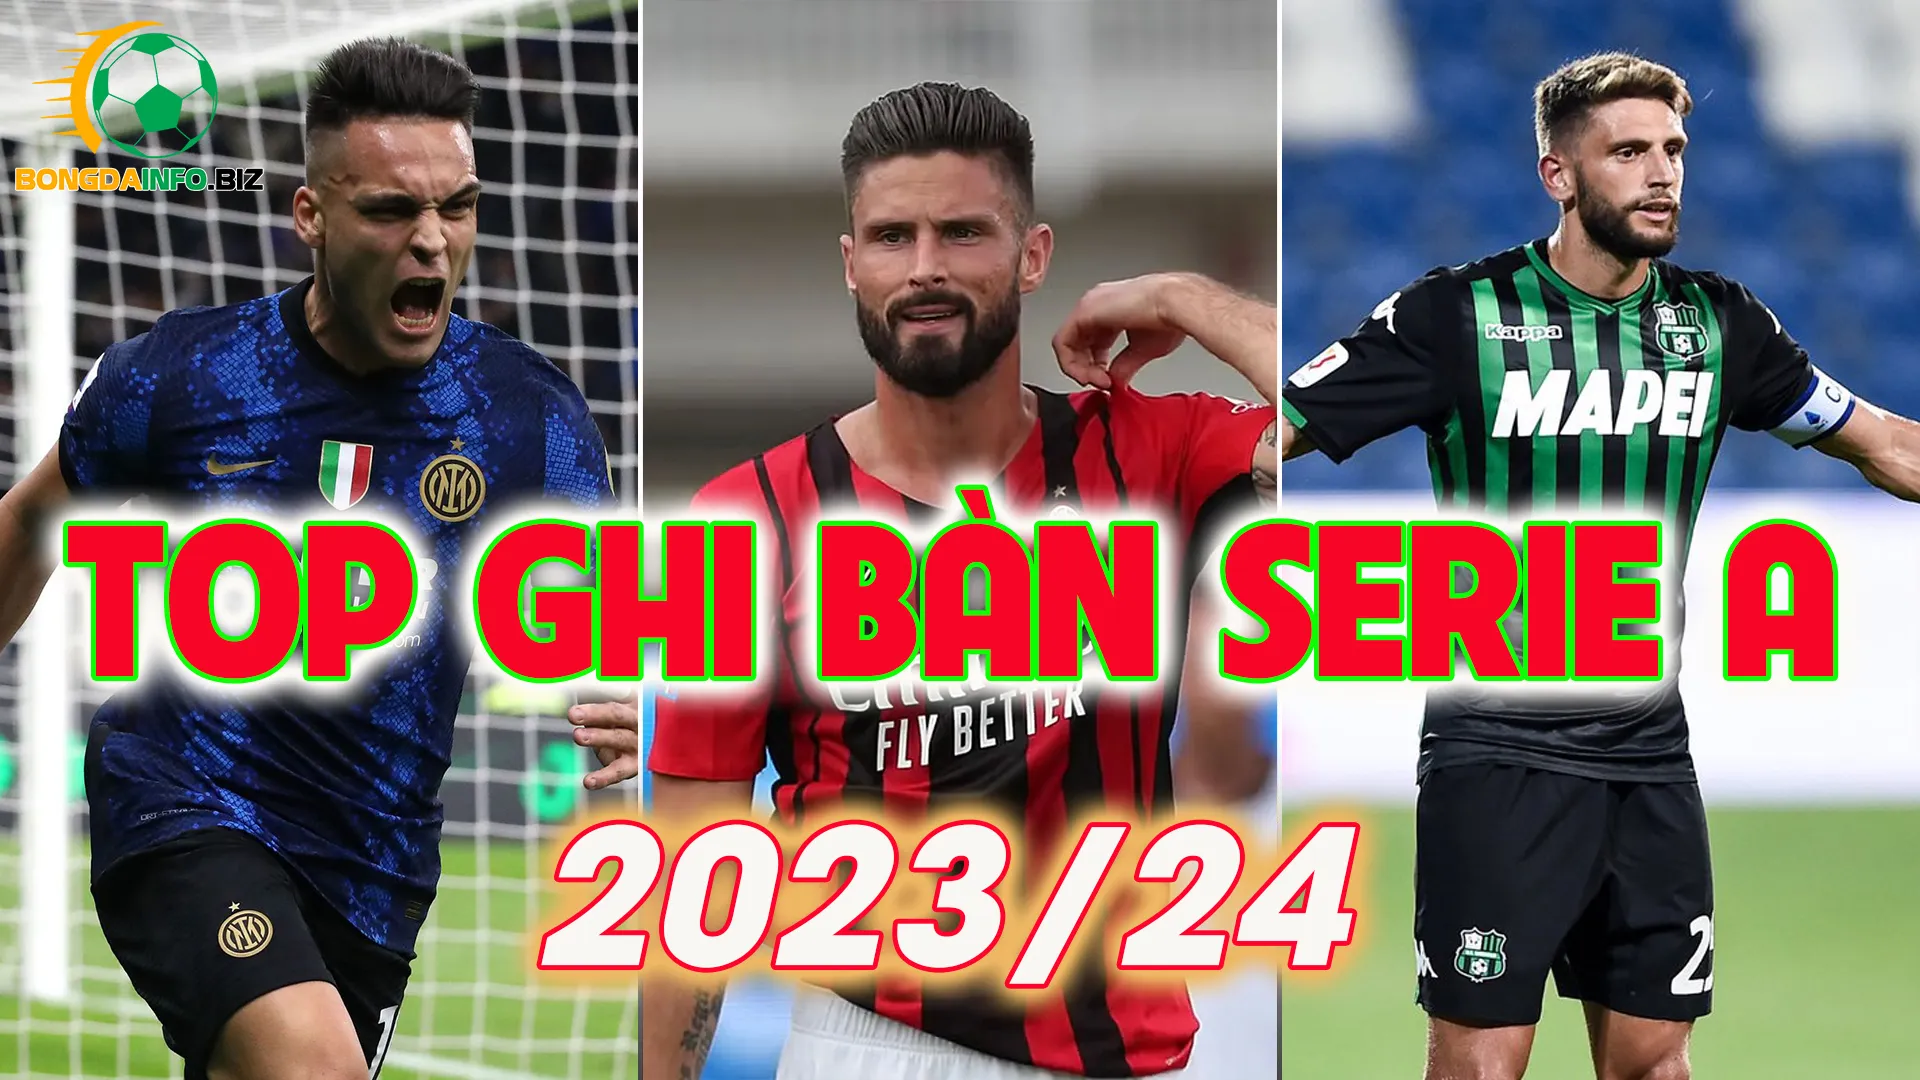 Top ghi bàn Serie A mùa giải 2023/24